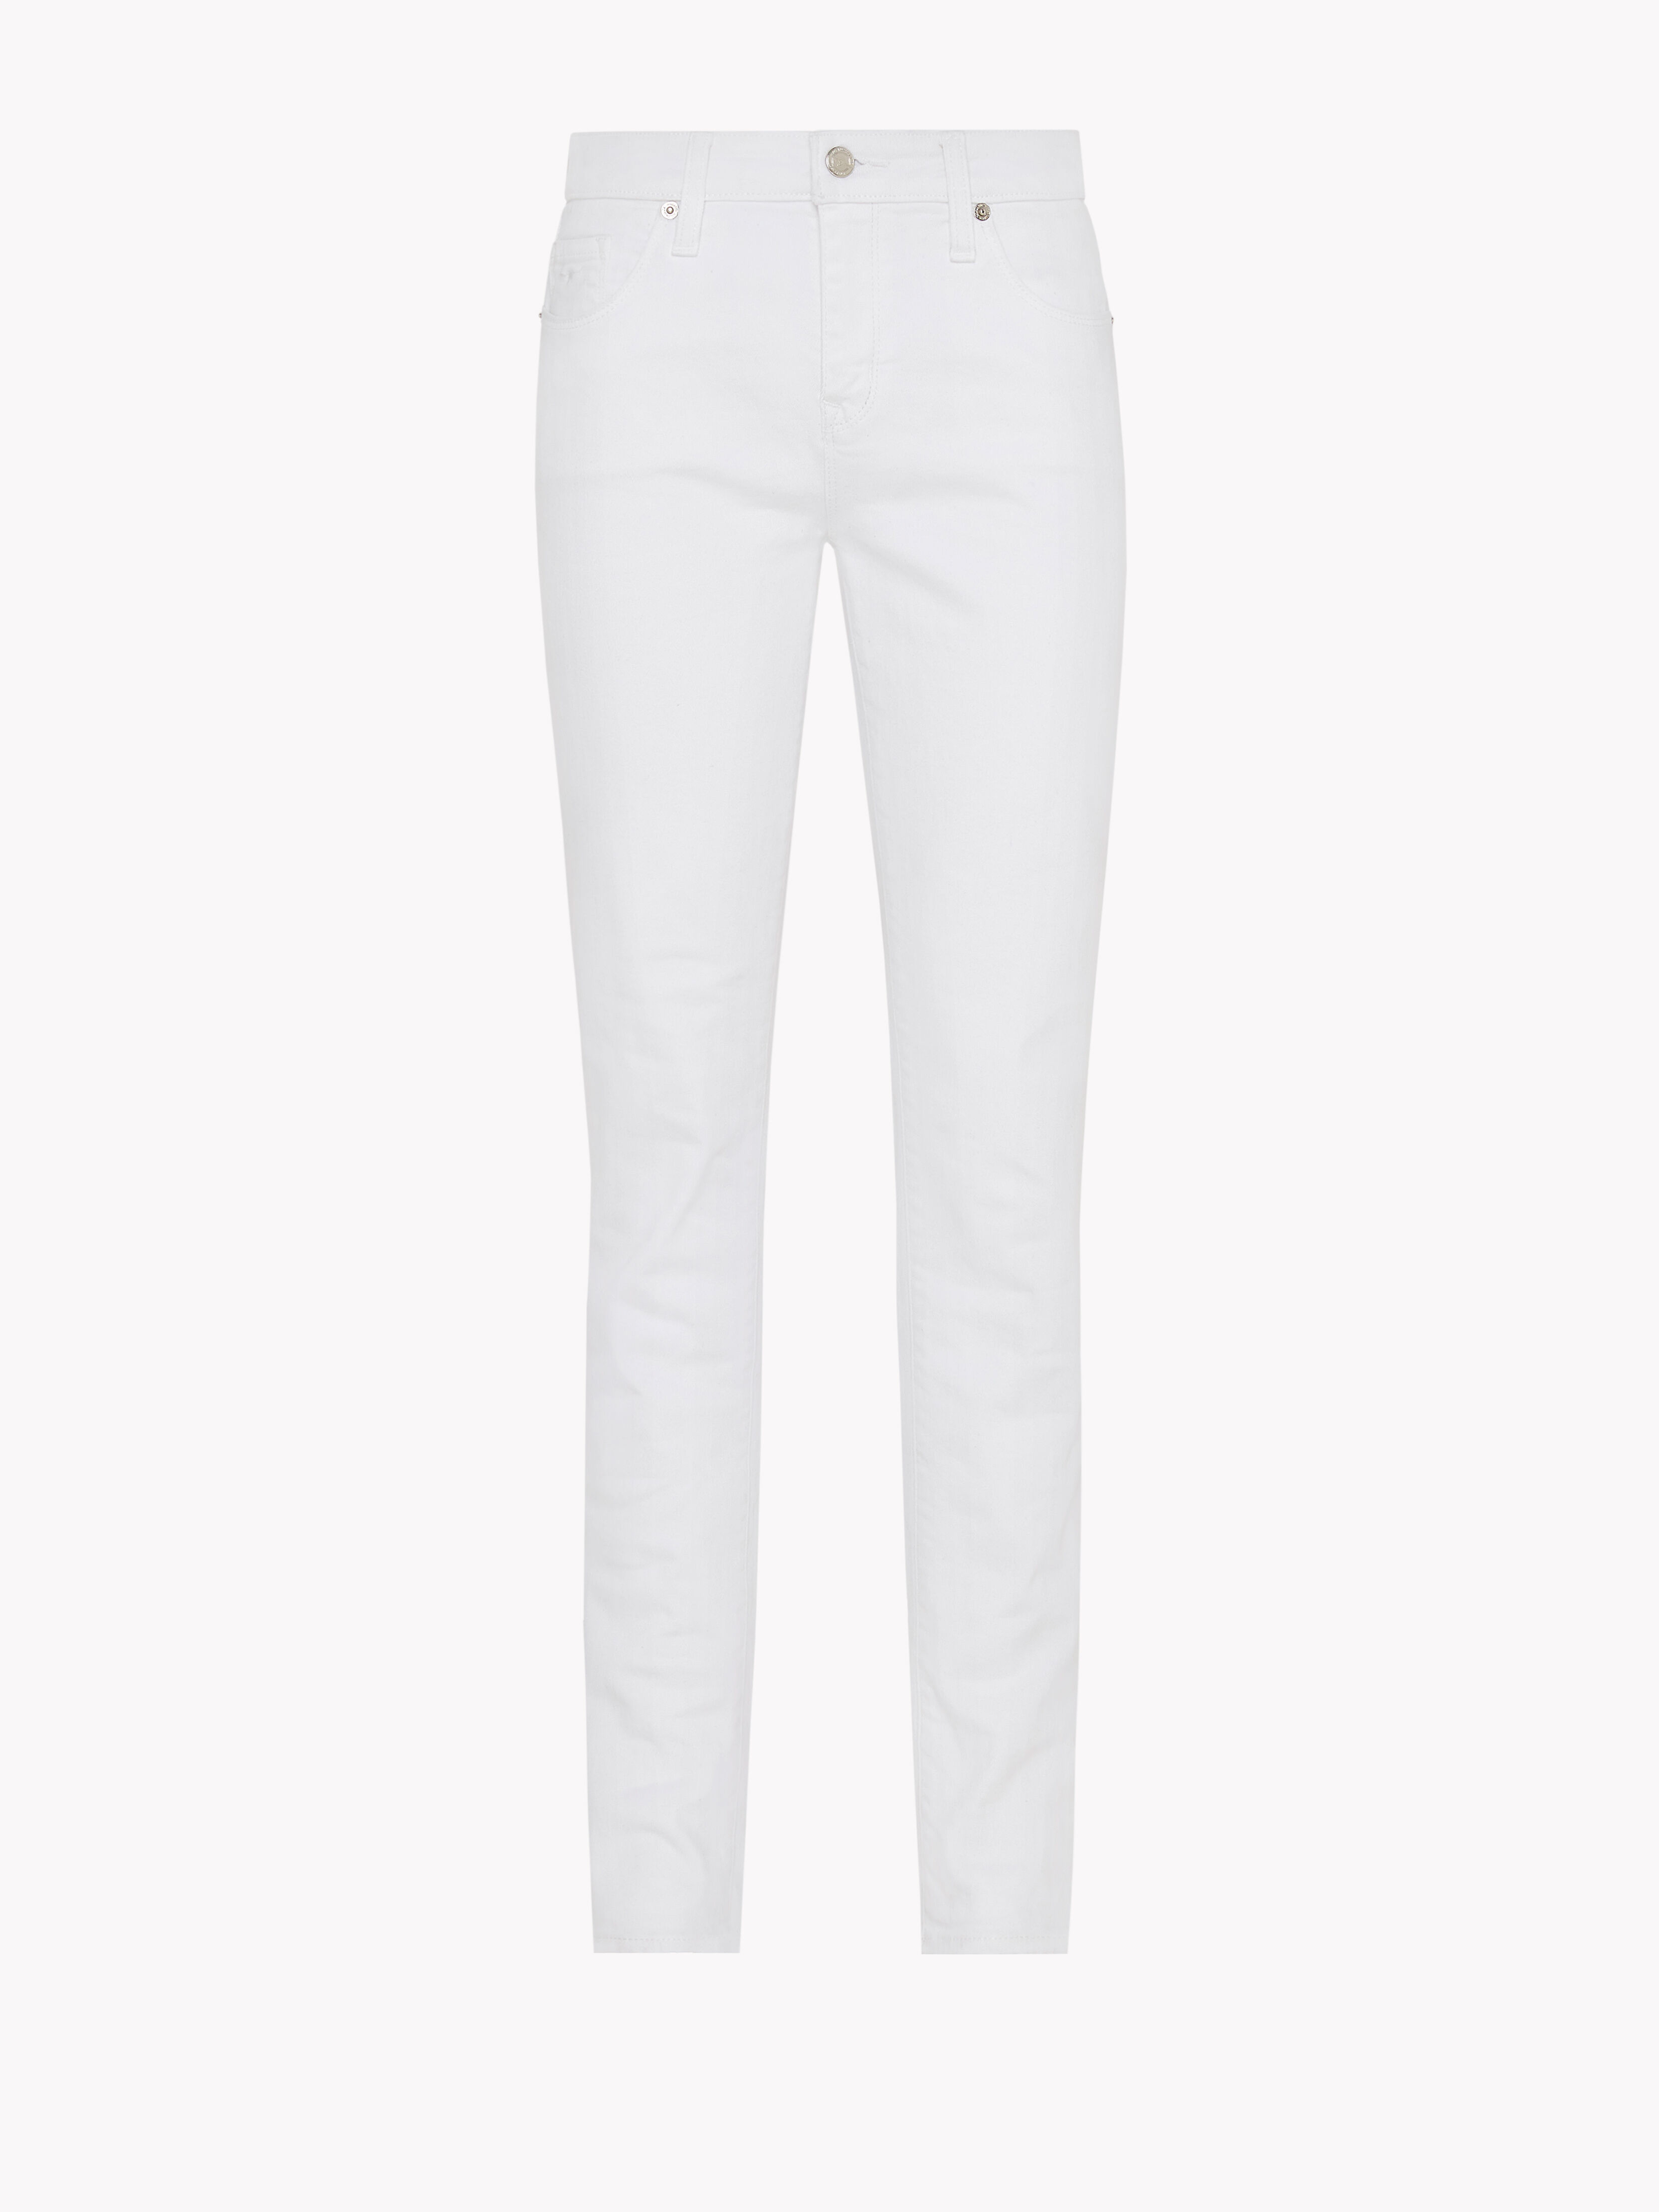 Jeans, Trousers \u0026 Pants | R.M.Williams 